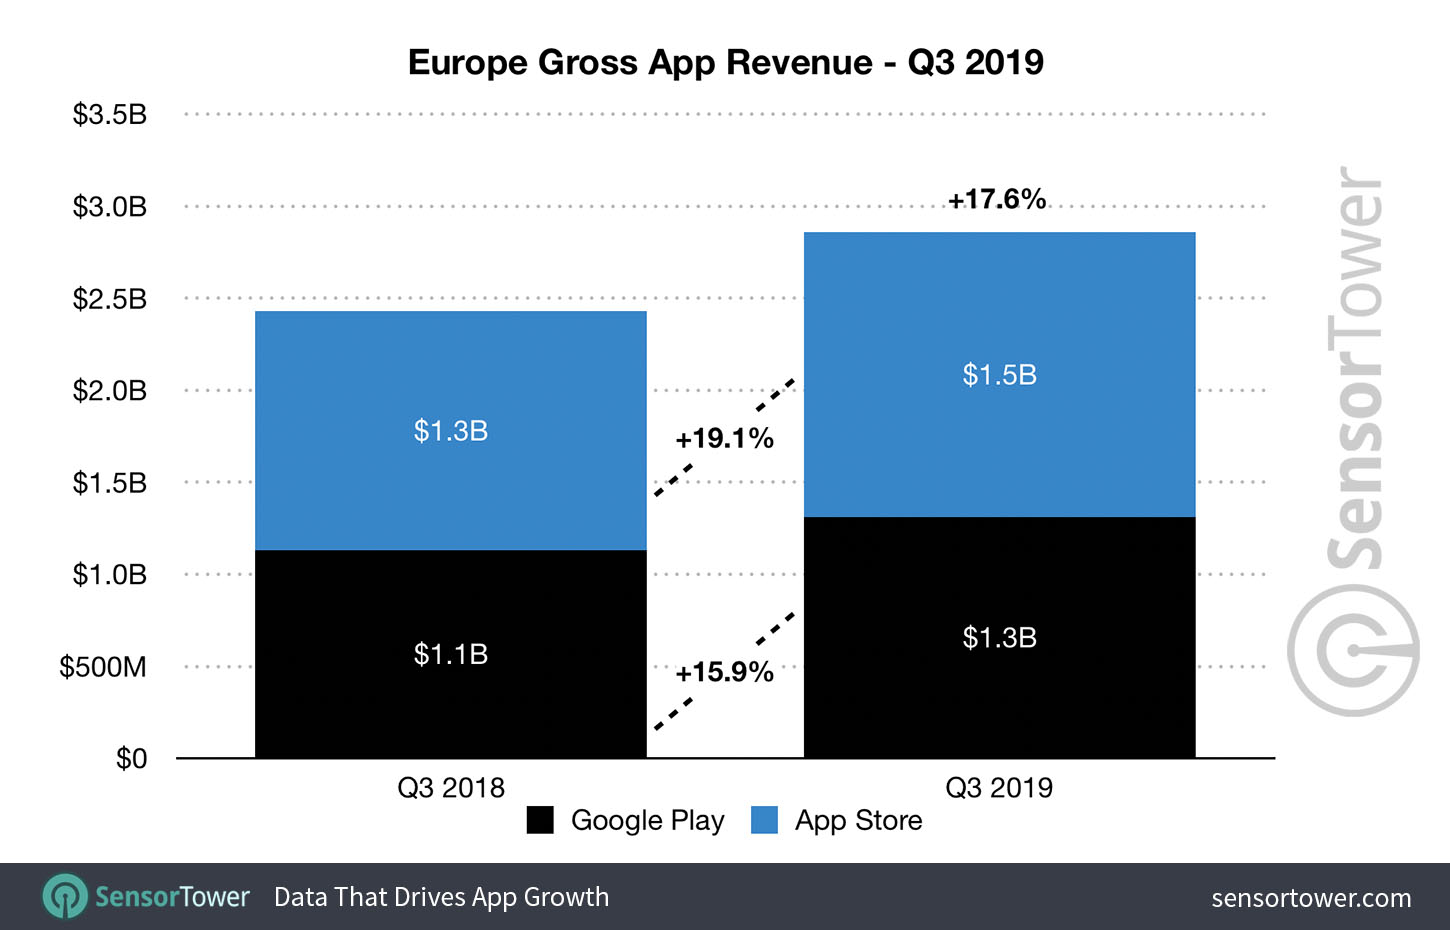 Q3 2019 Mobile App Revenue for Europe